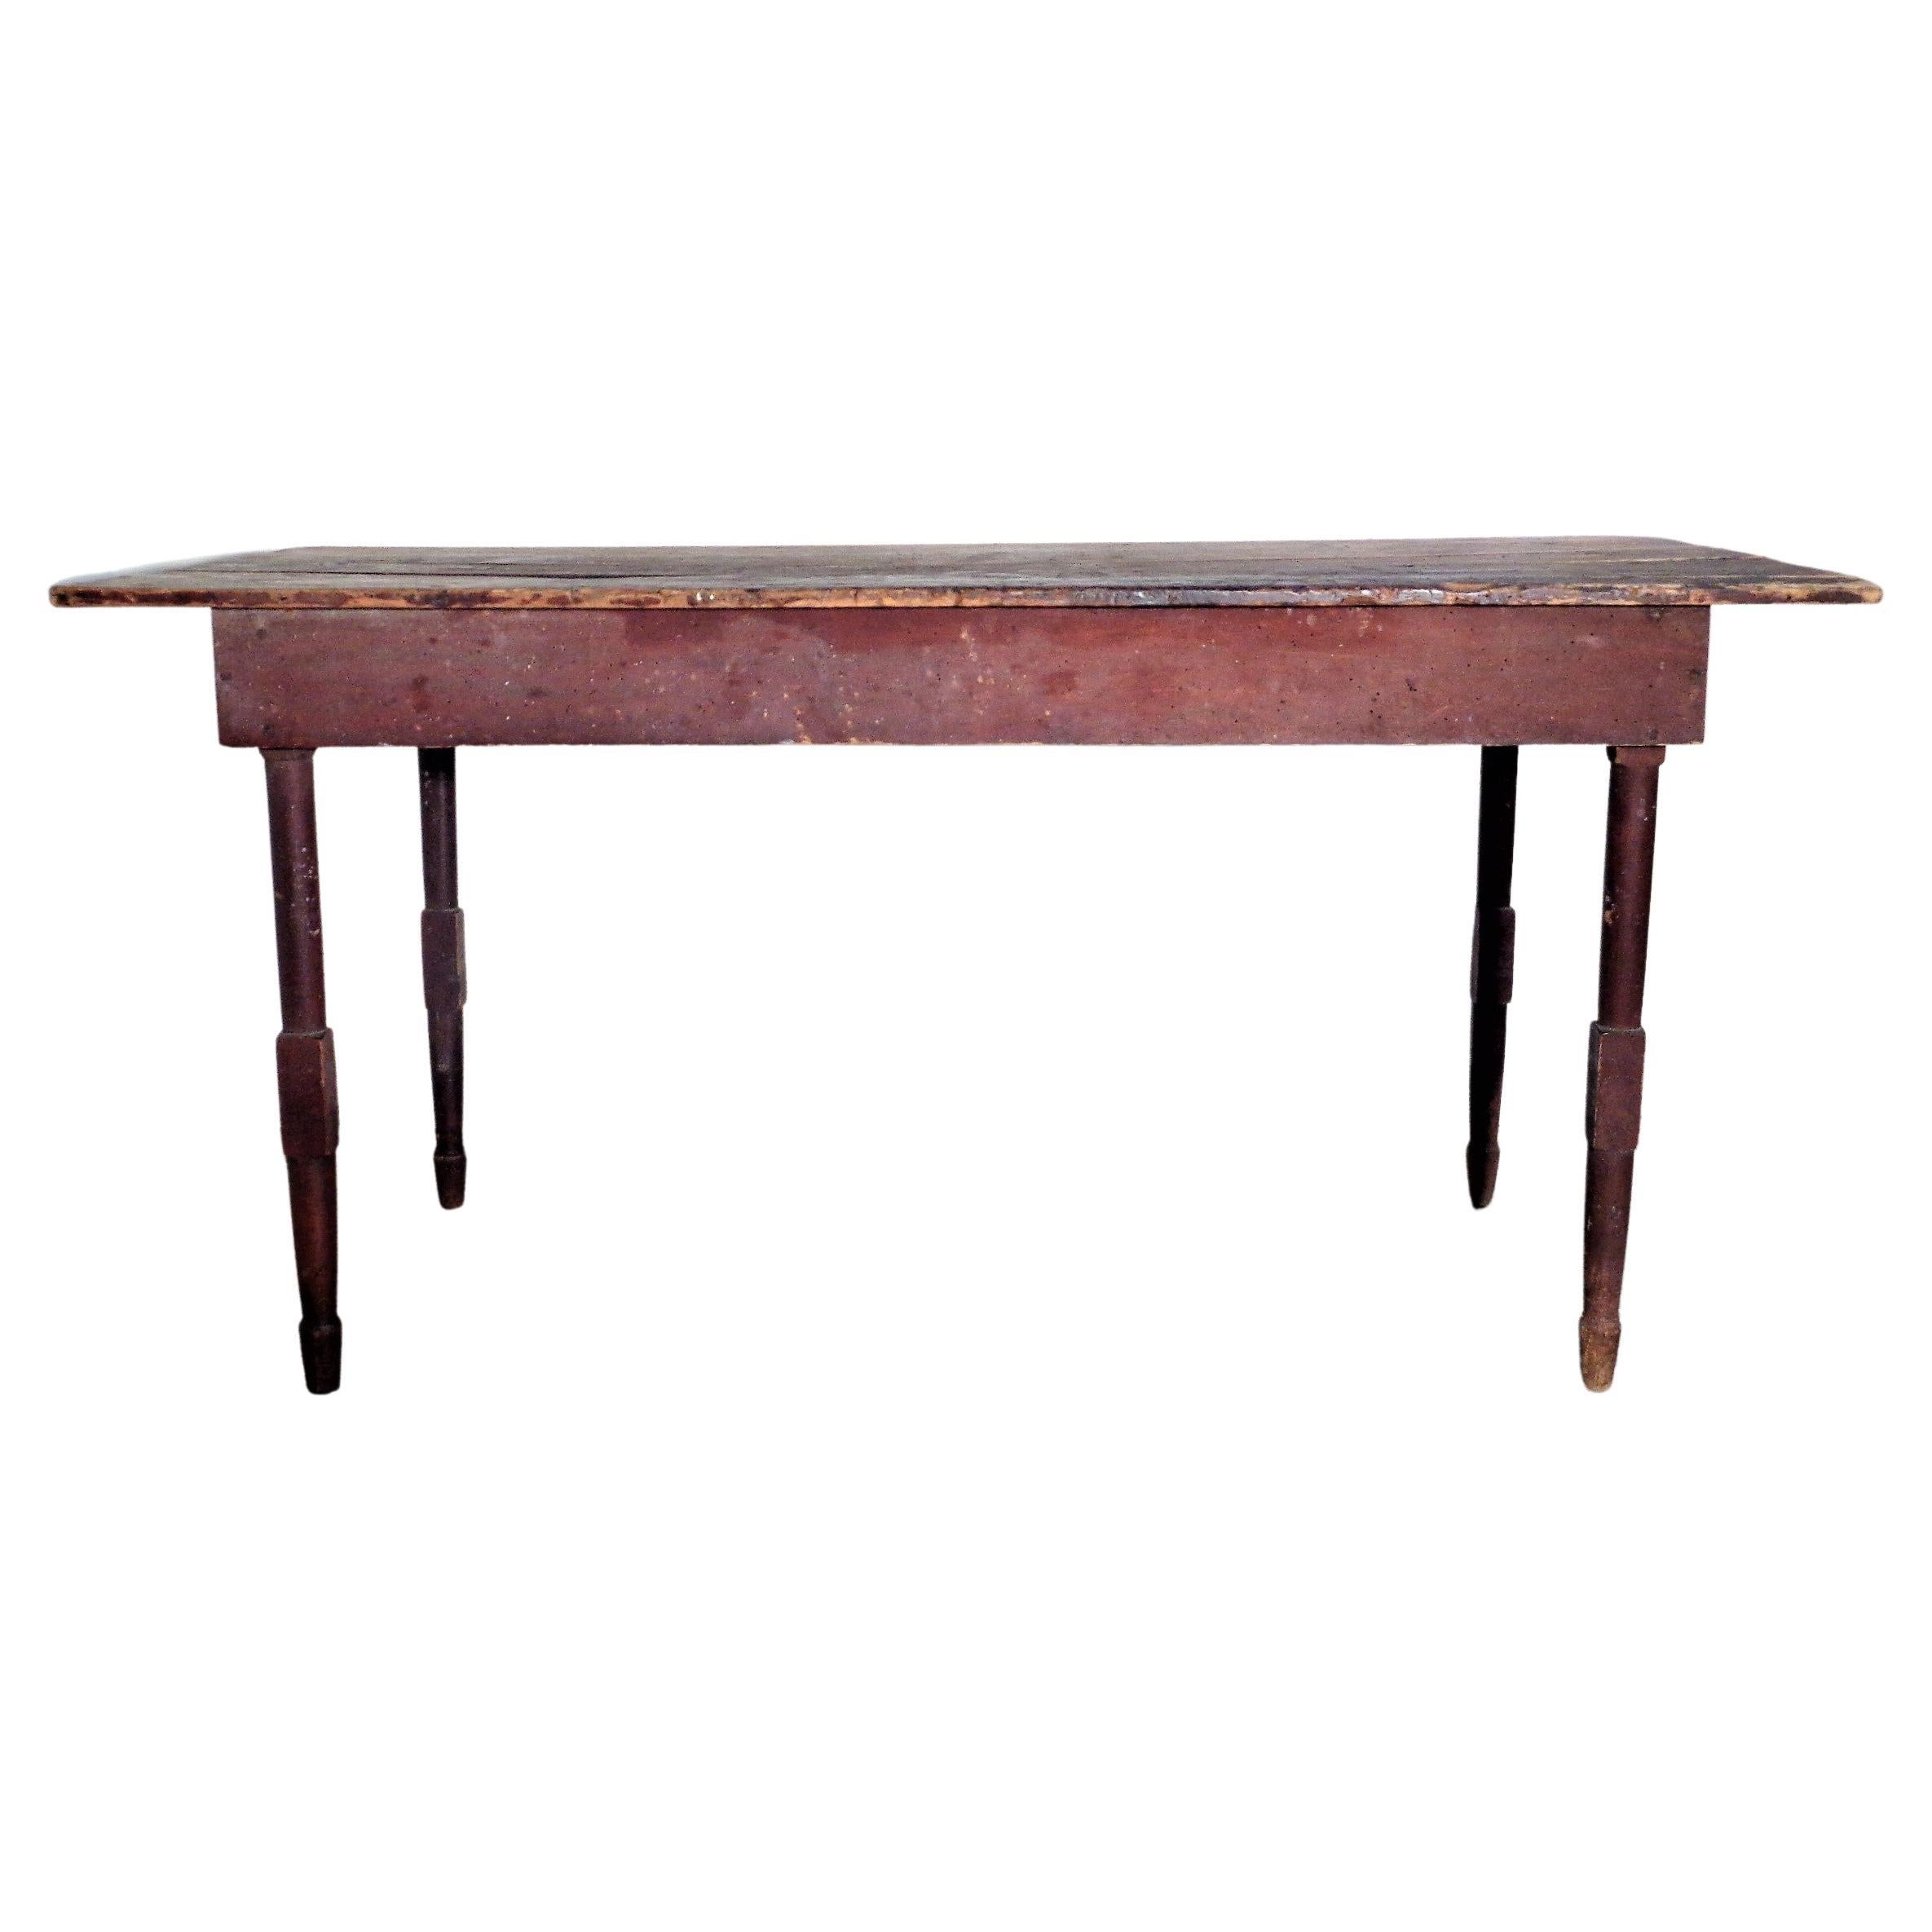 Antique American Farm Table, circa 1850-1860 For Sale 5